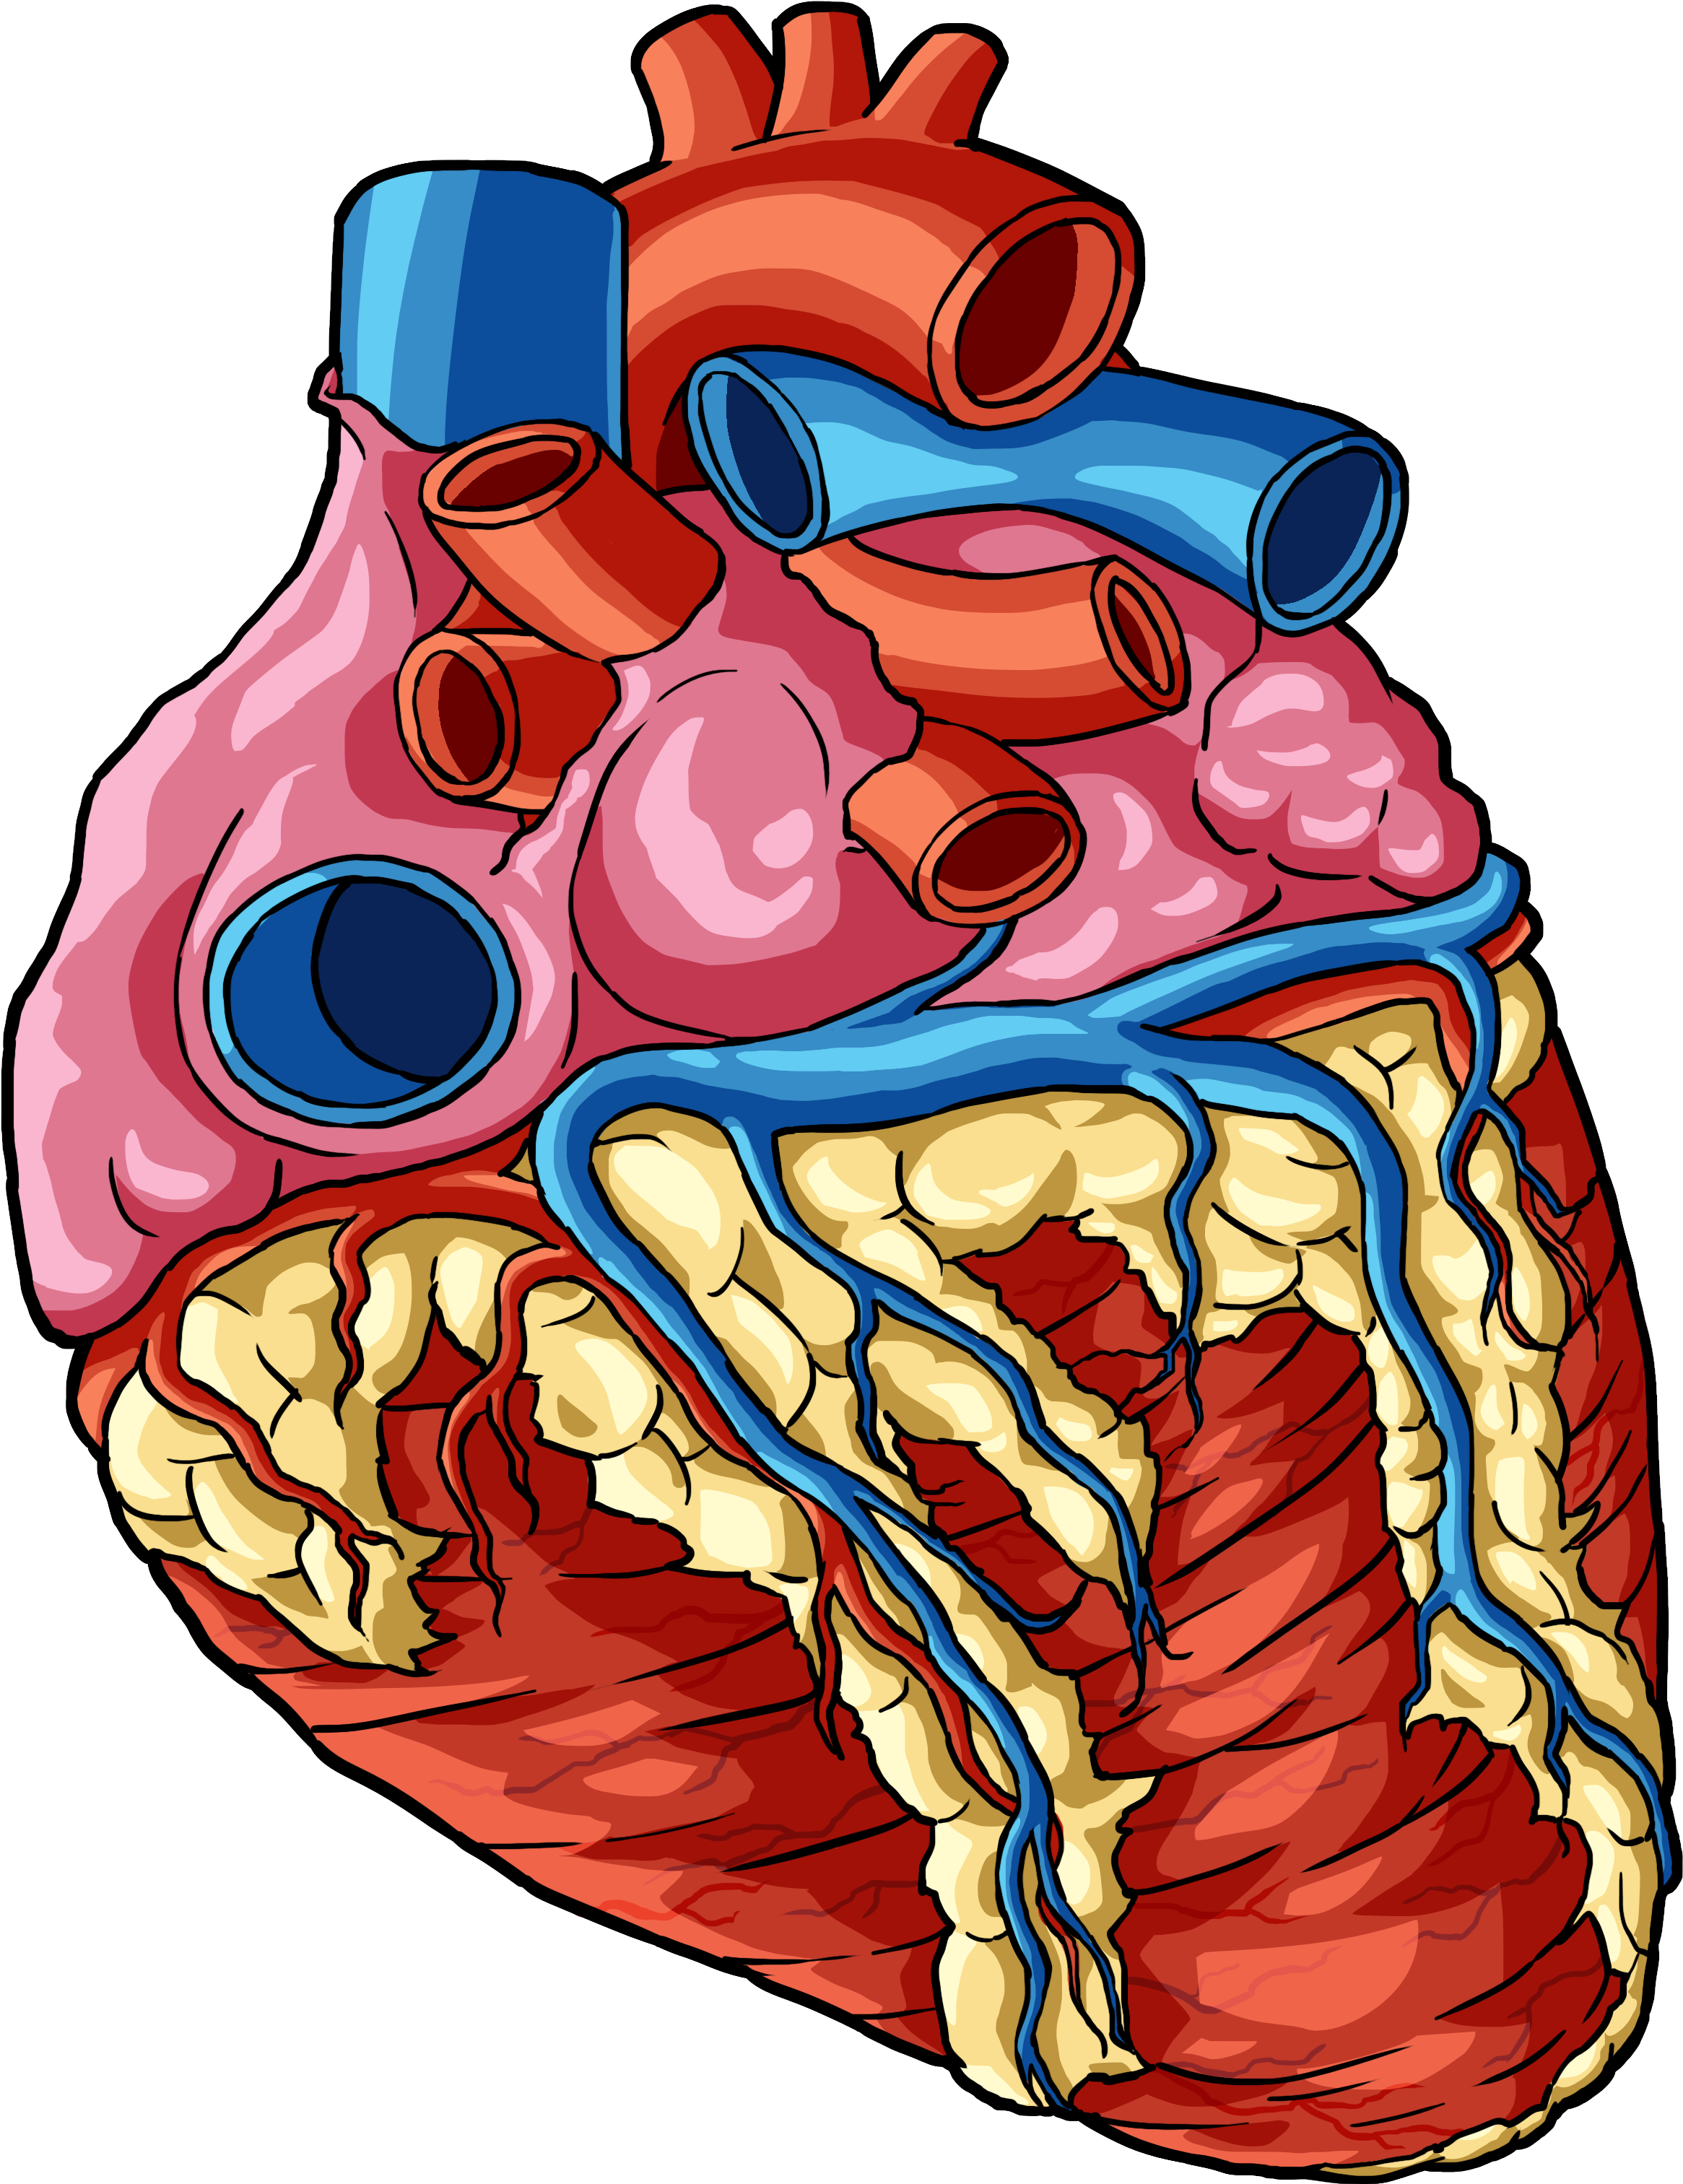 Anatomical Heart Png